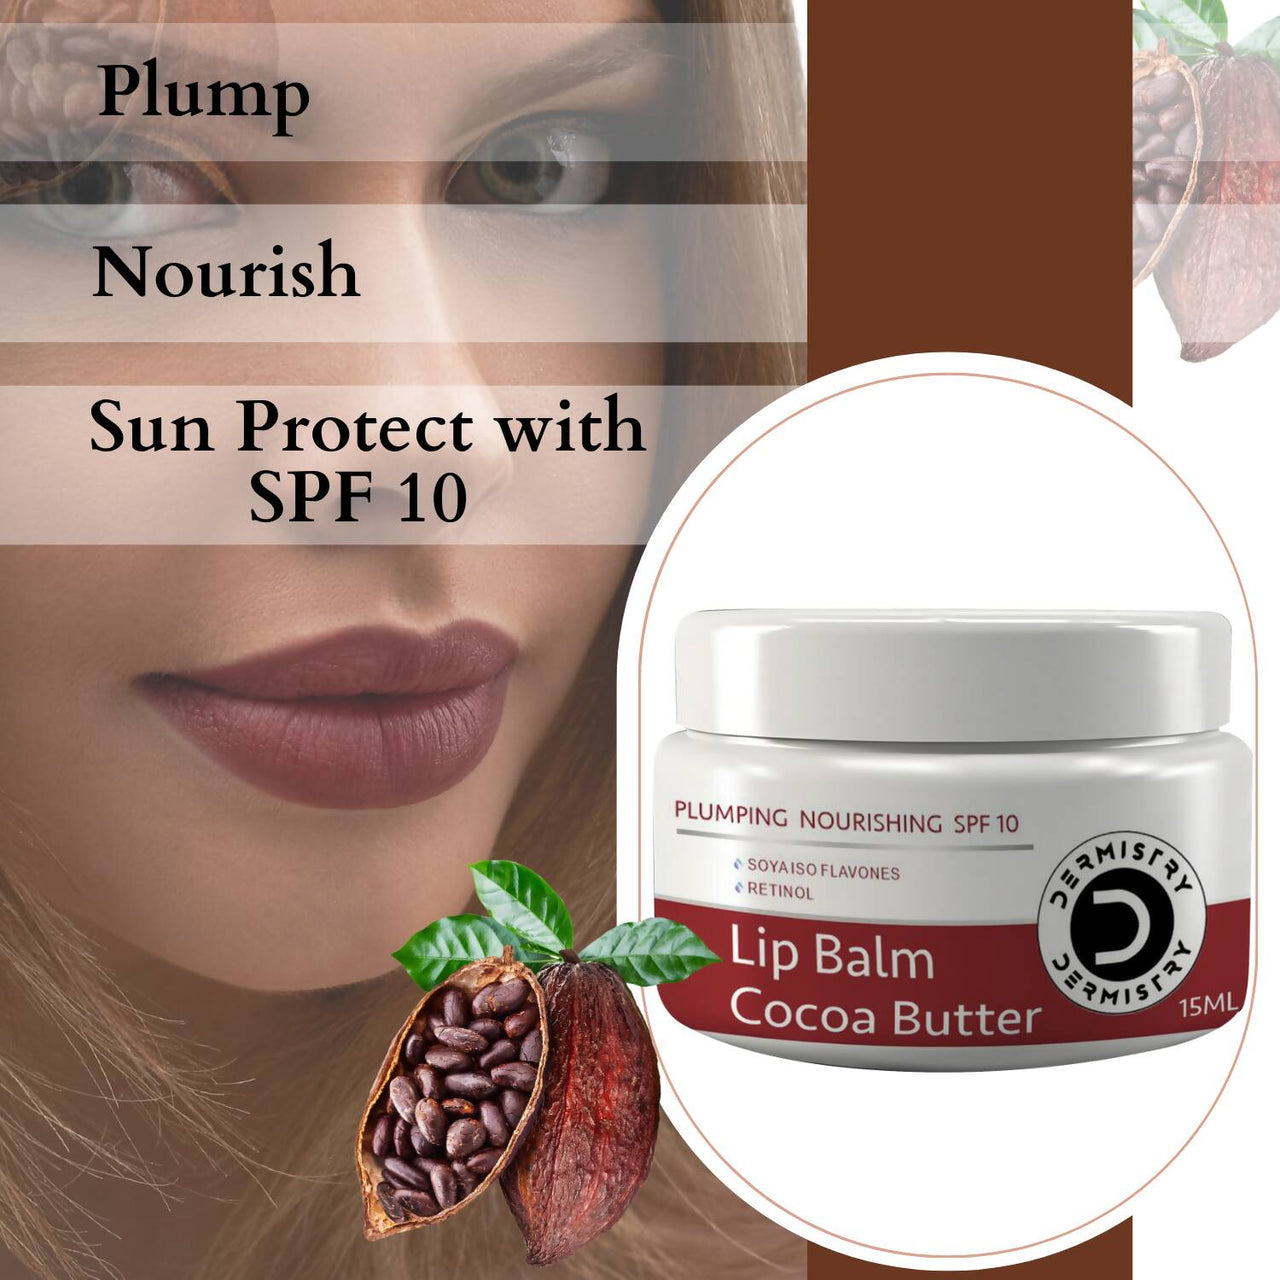 Dermistry Nourishing Cocoa Butter Lip Balm & Coffee Lip Scrub - Distacart